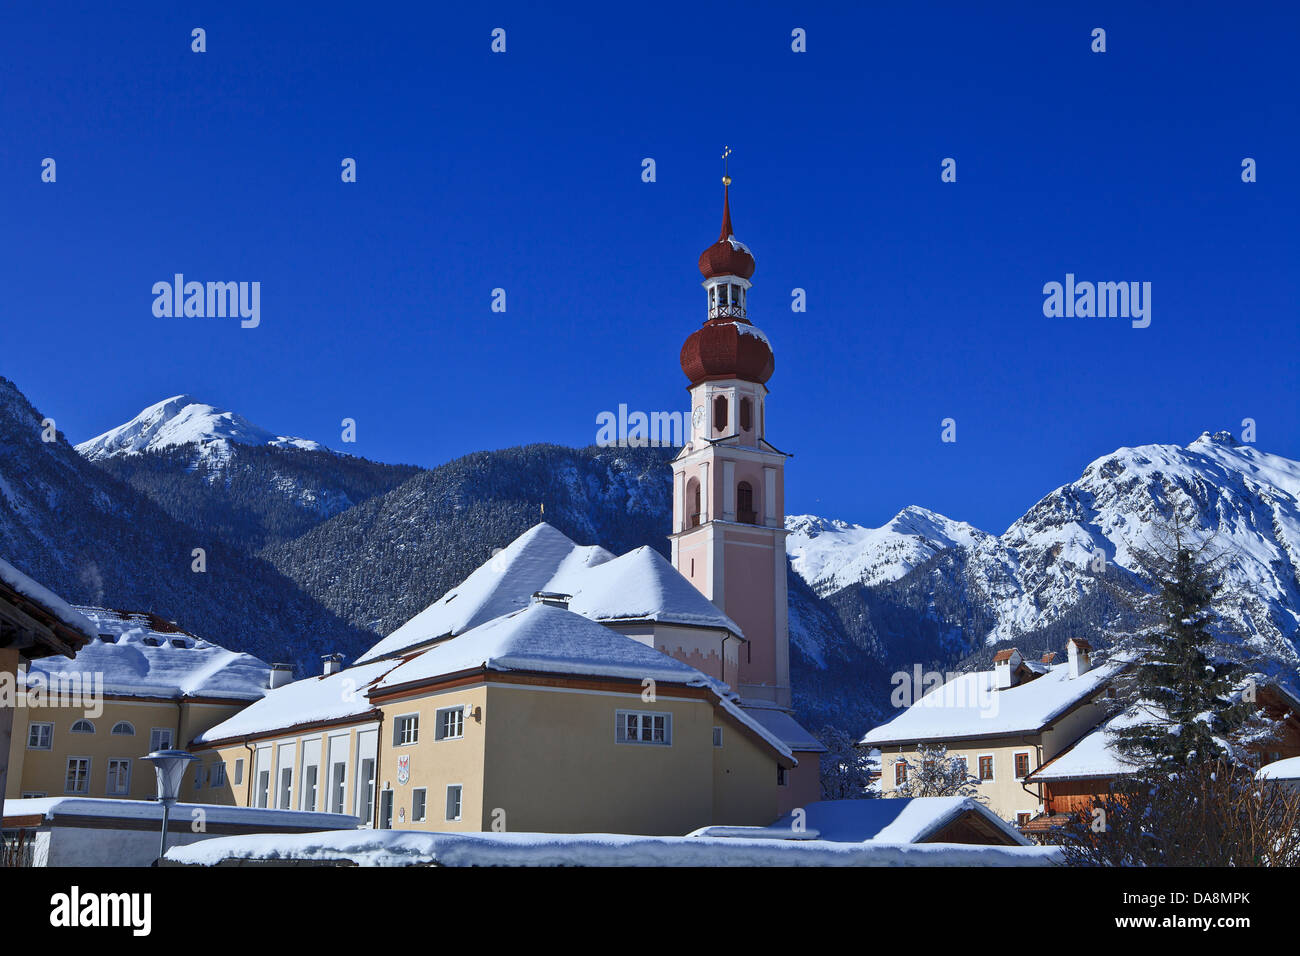 Austria, Europa Tyrol, Gurgltal, Nassereith, inverno, chiesa, neve, sky, montagne, Lechtal, Valle del Lech, Alpi, cielo, blu, bianco Foto Stock